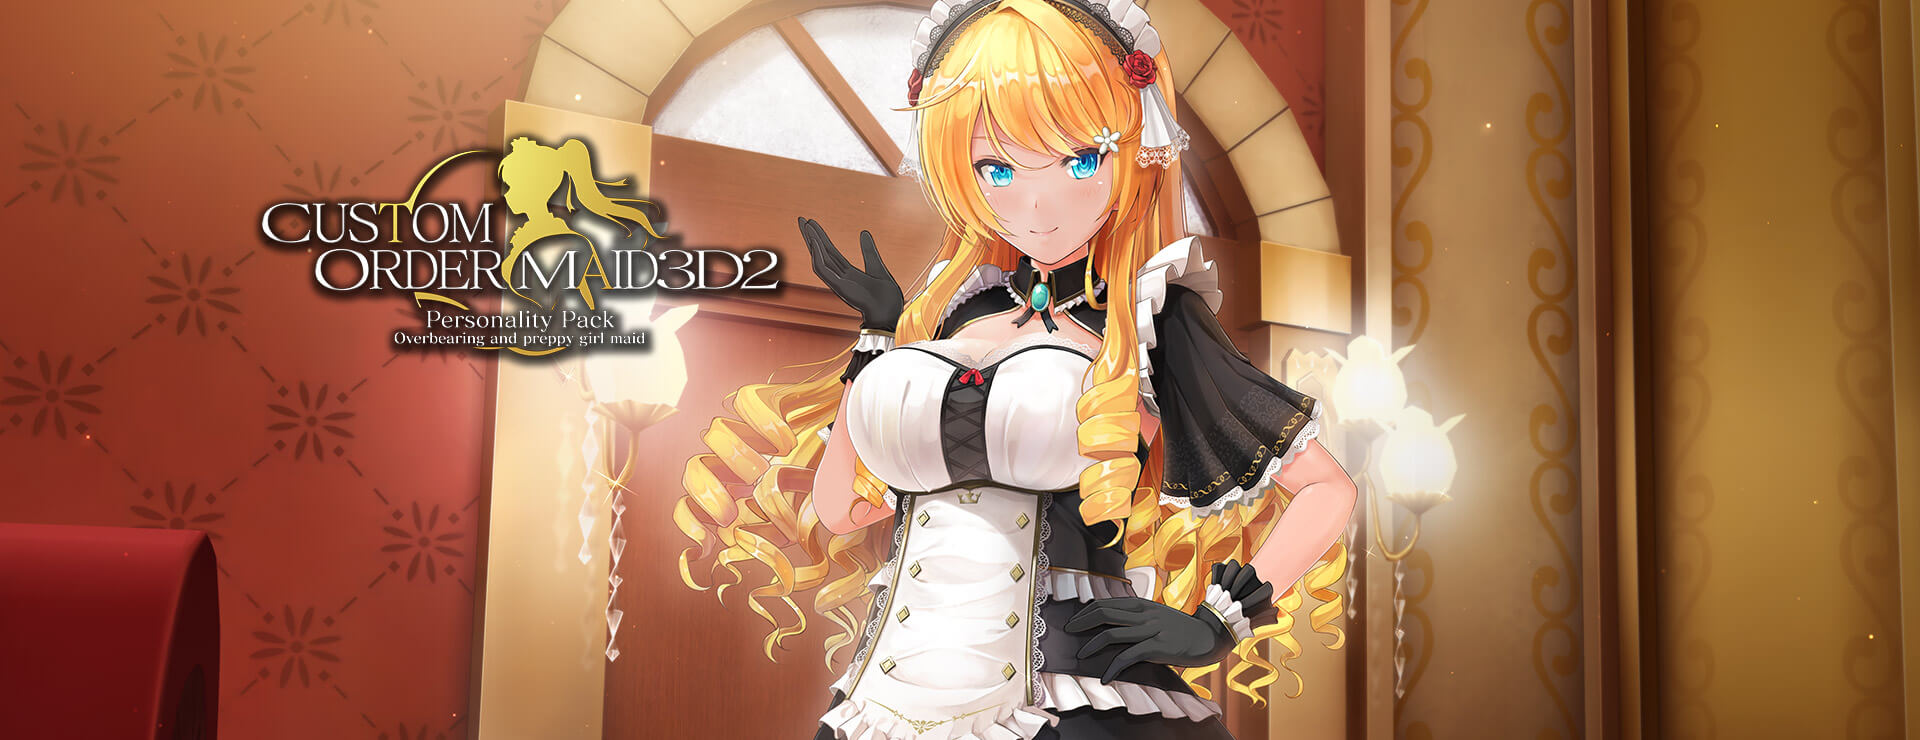 Custom Order Maid 3D2: Overbearing and Preppy Girl Maid DLC - 仿真游戏 遊戲